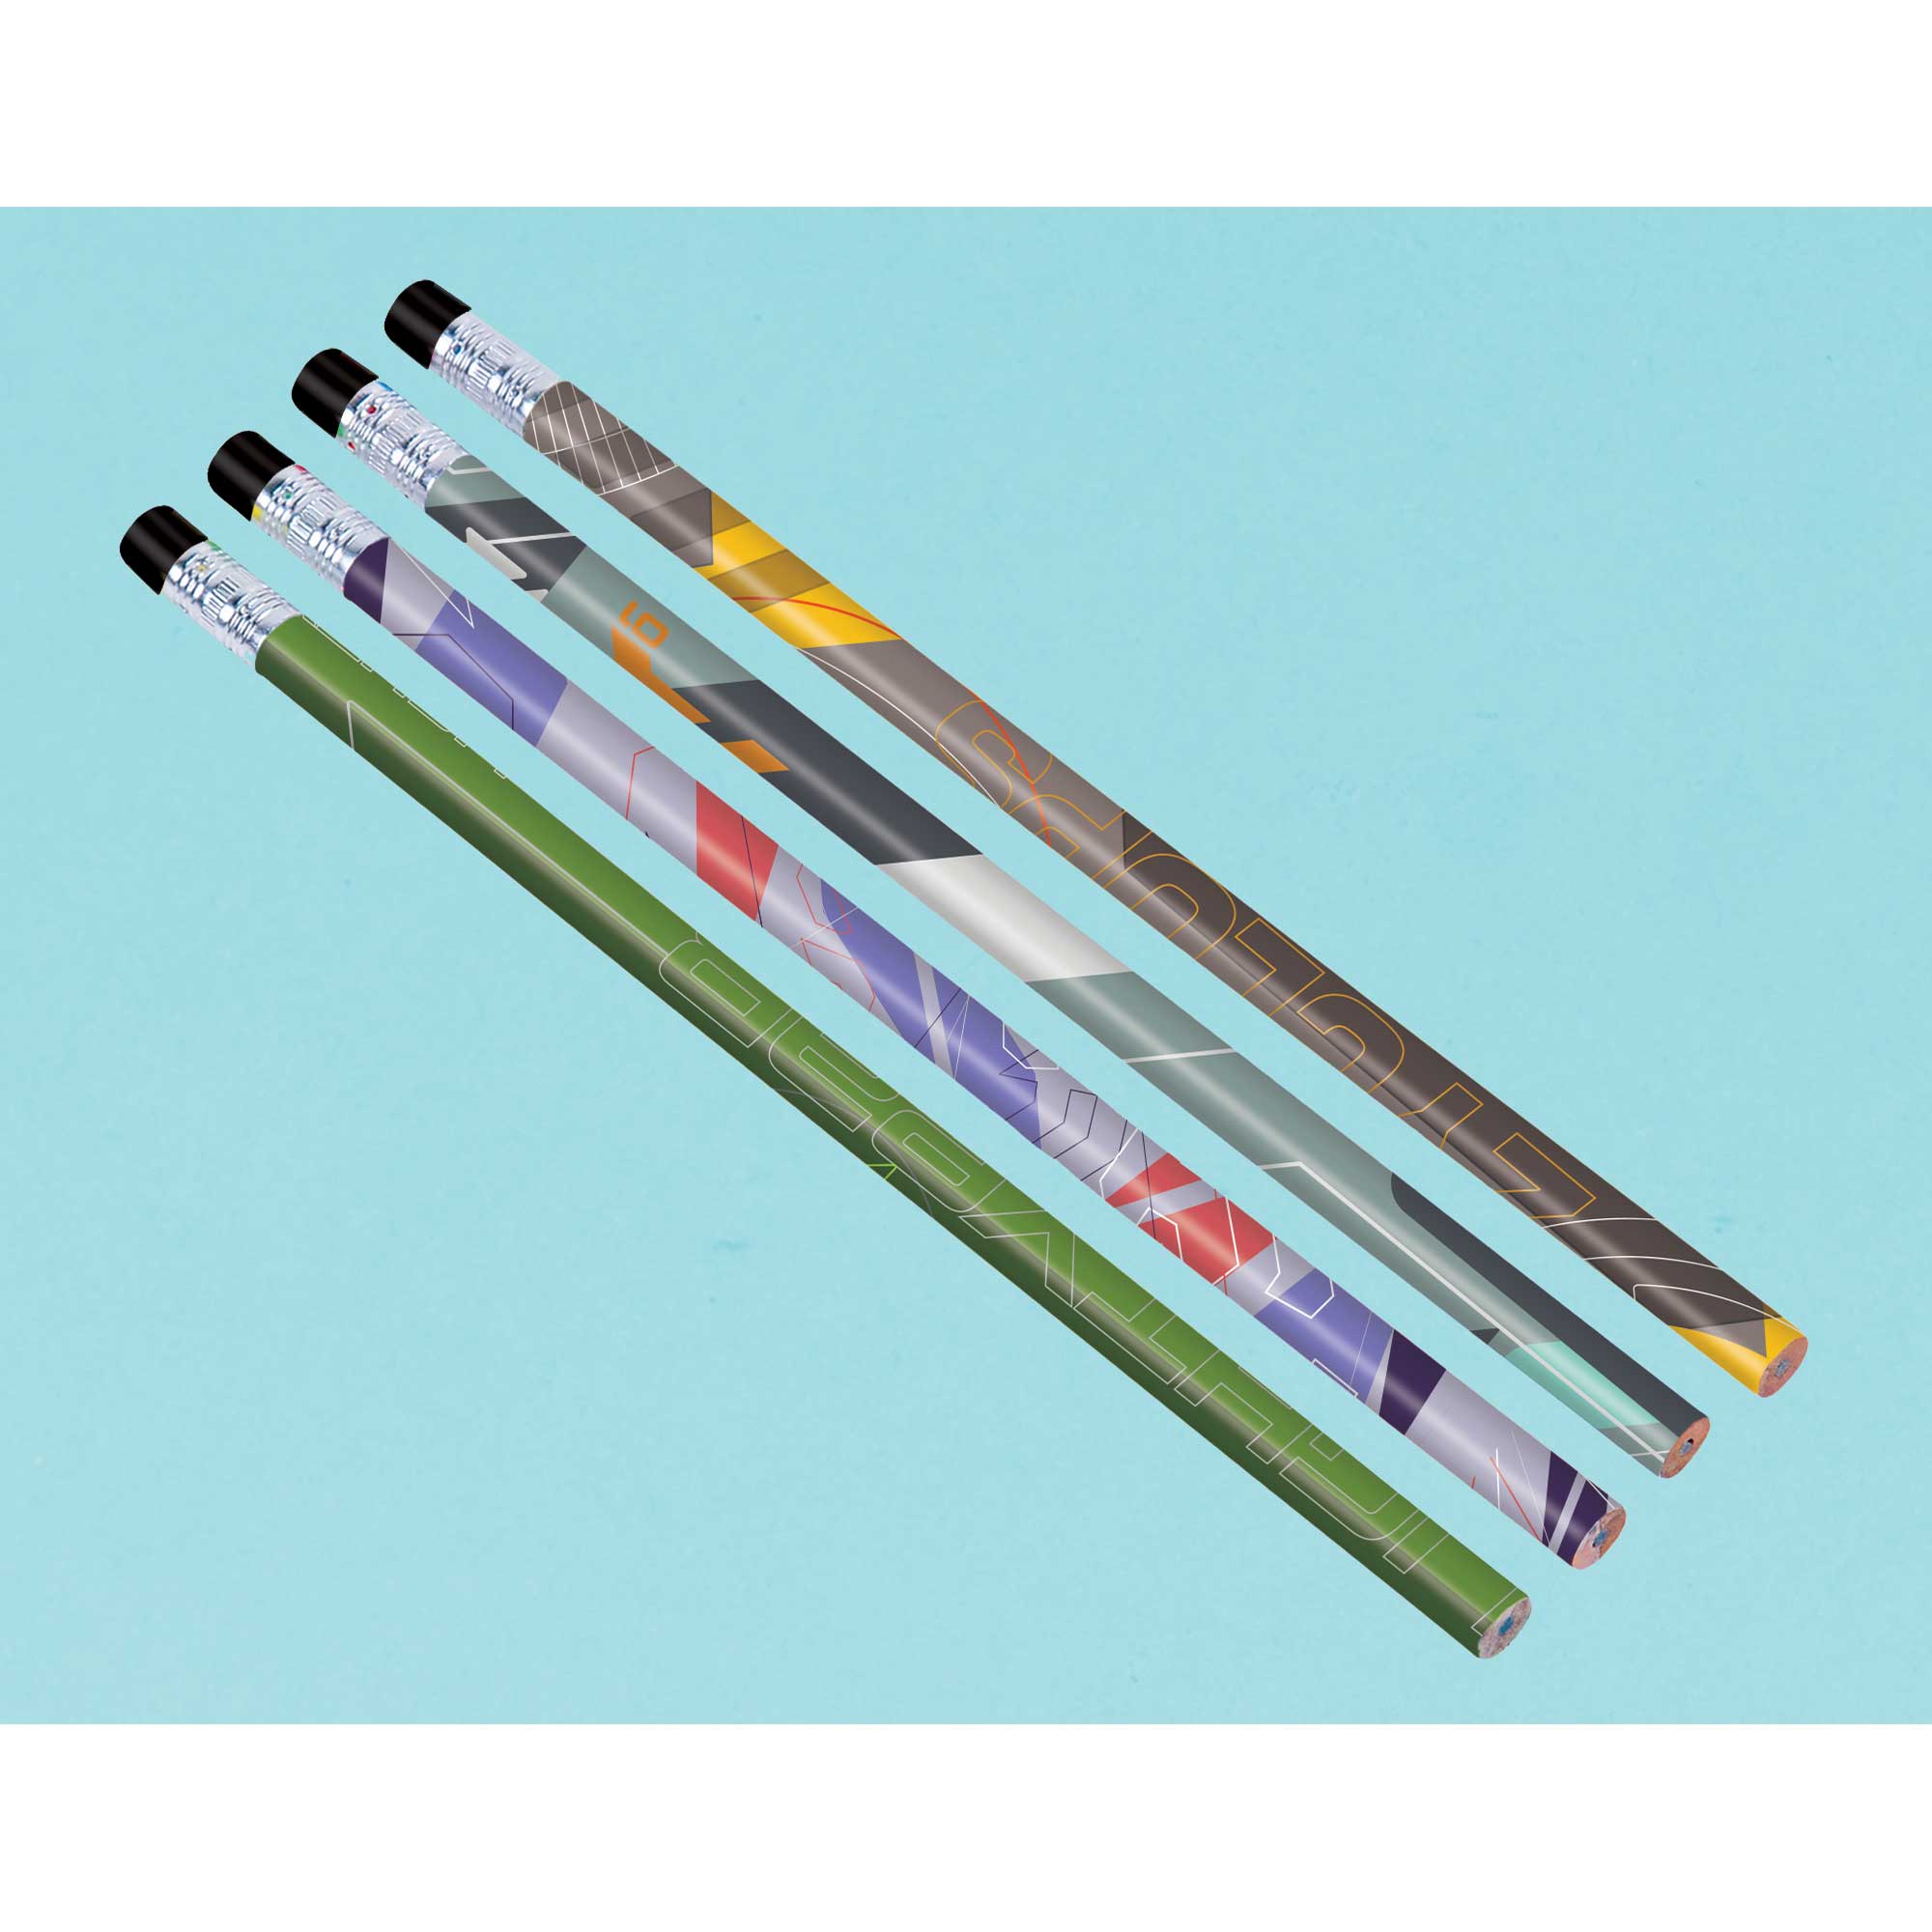 Buzz Lightyear Pencils - 6 Pack Default Title